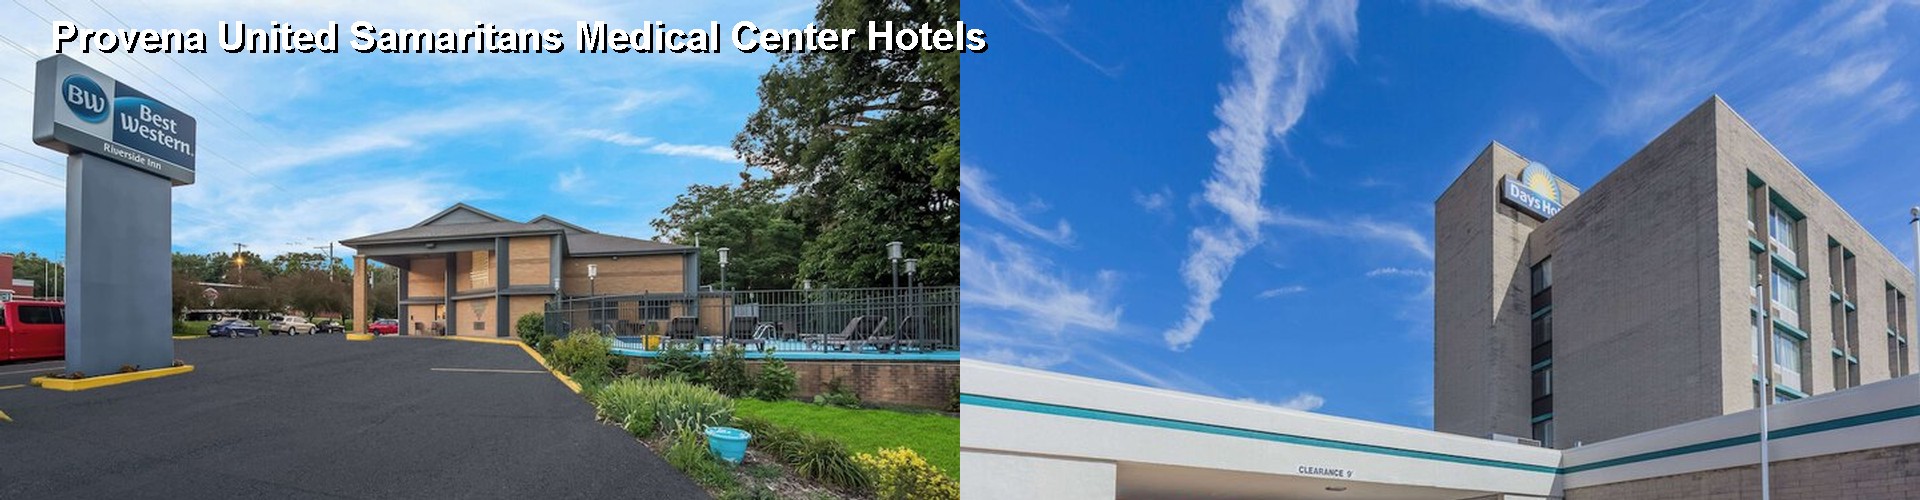 4 Best Hotels near Provena United Samaritans Medical Center